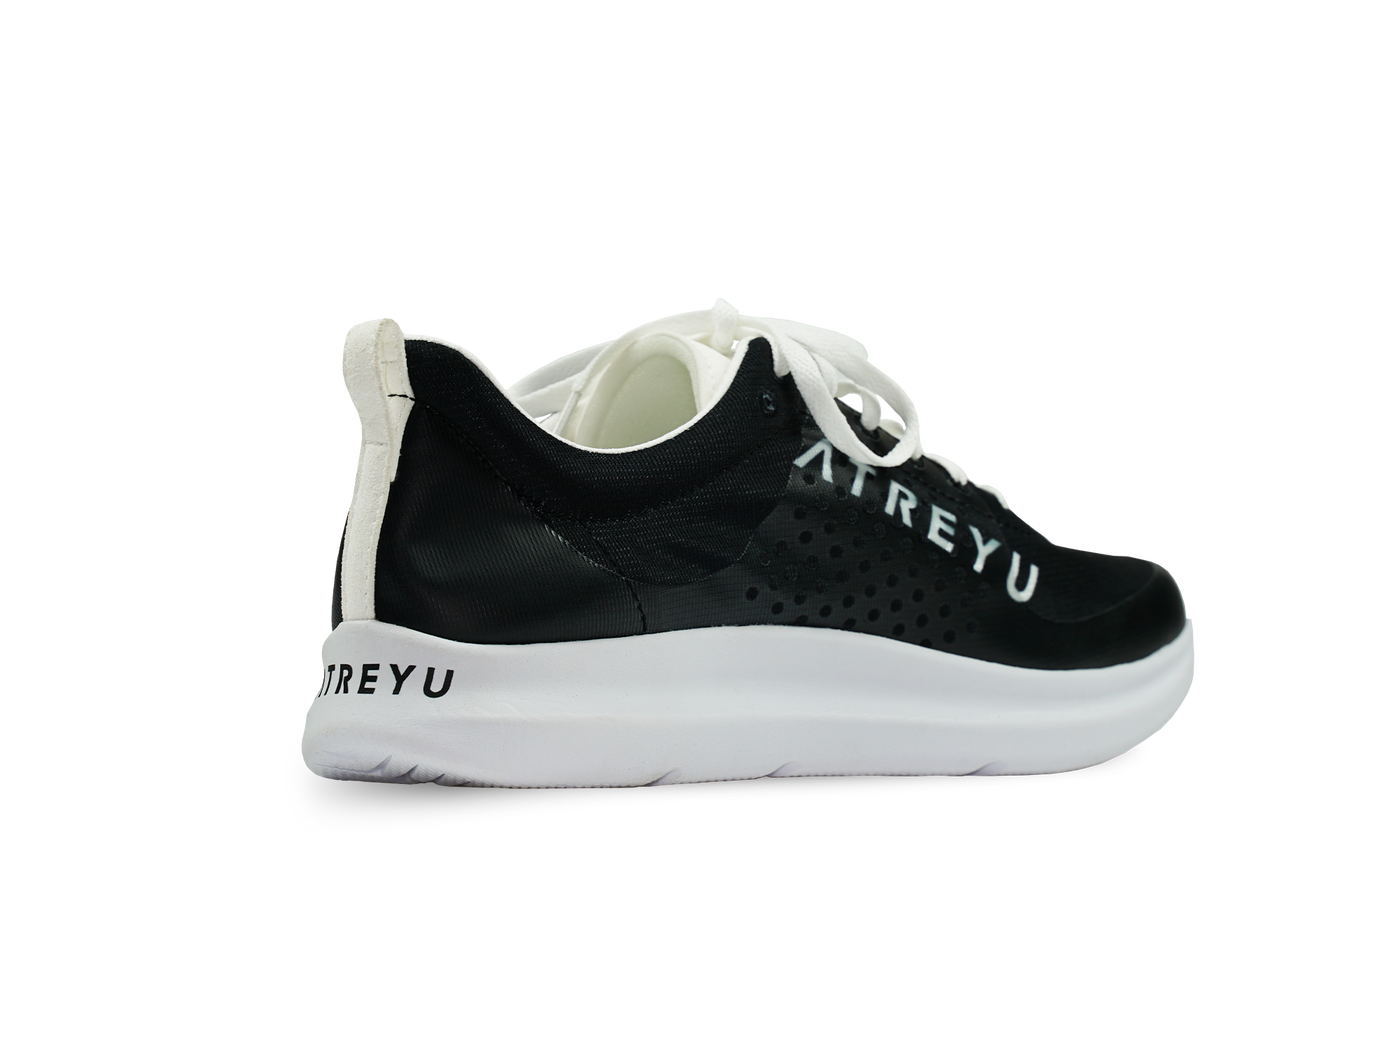 Atreyu Base Model - Lightweight running shoes back angle black